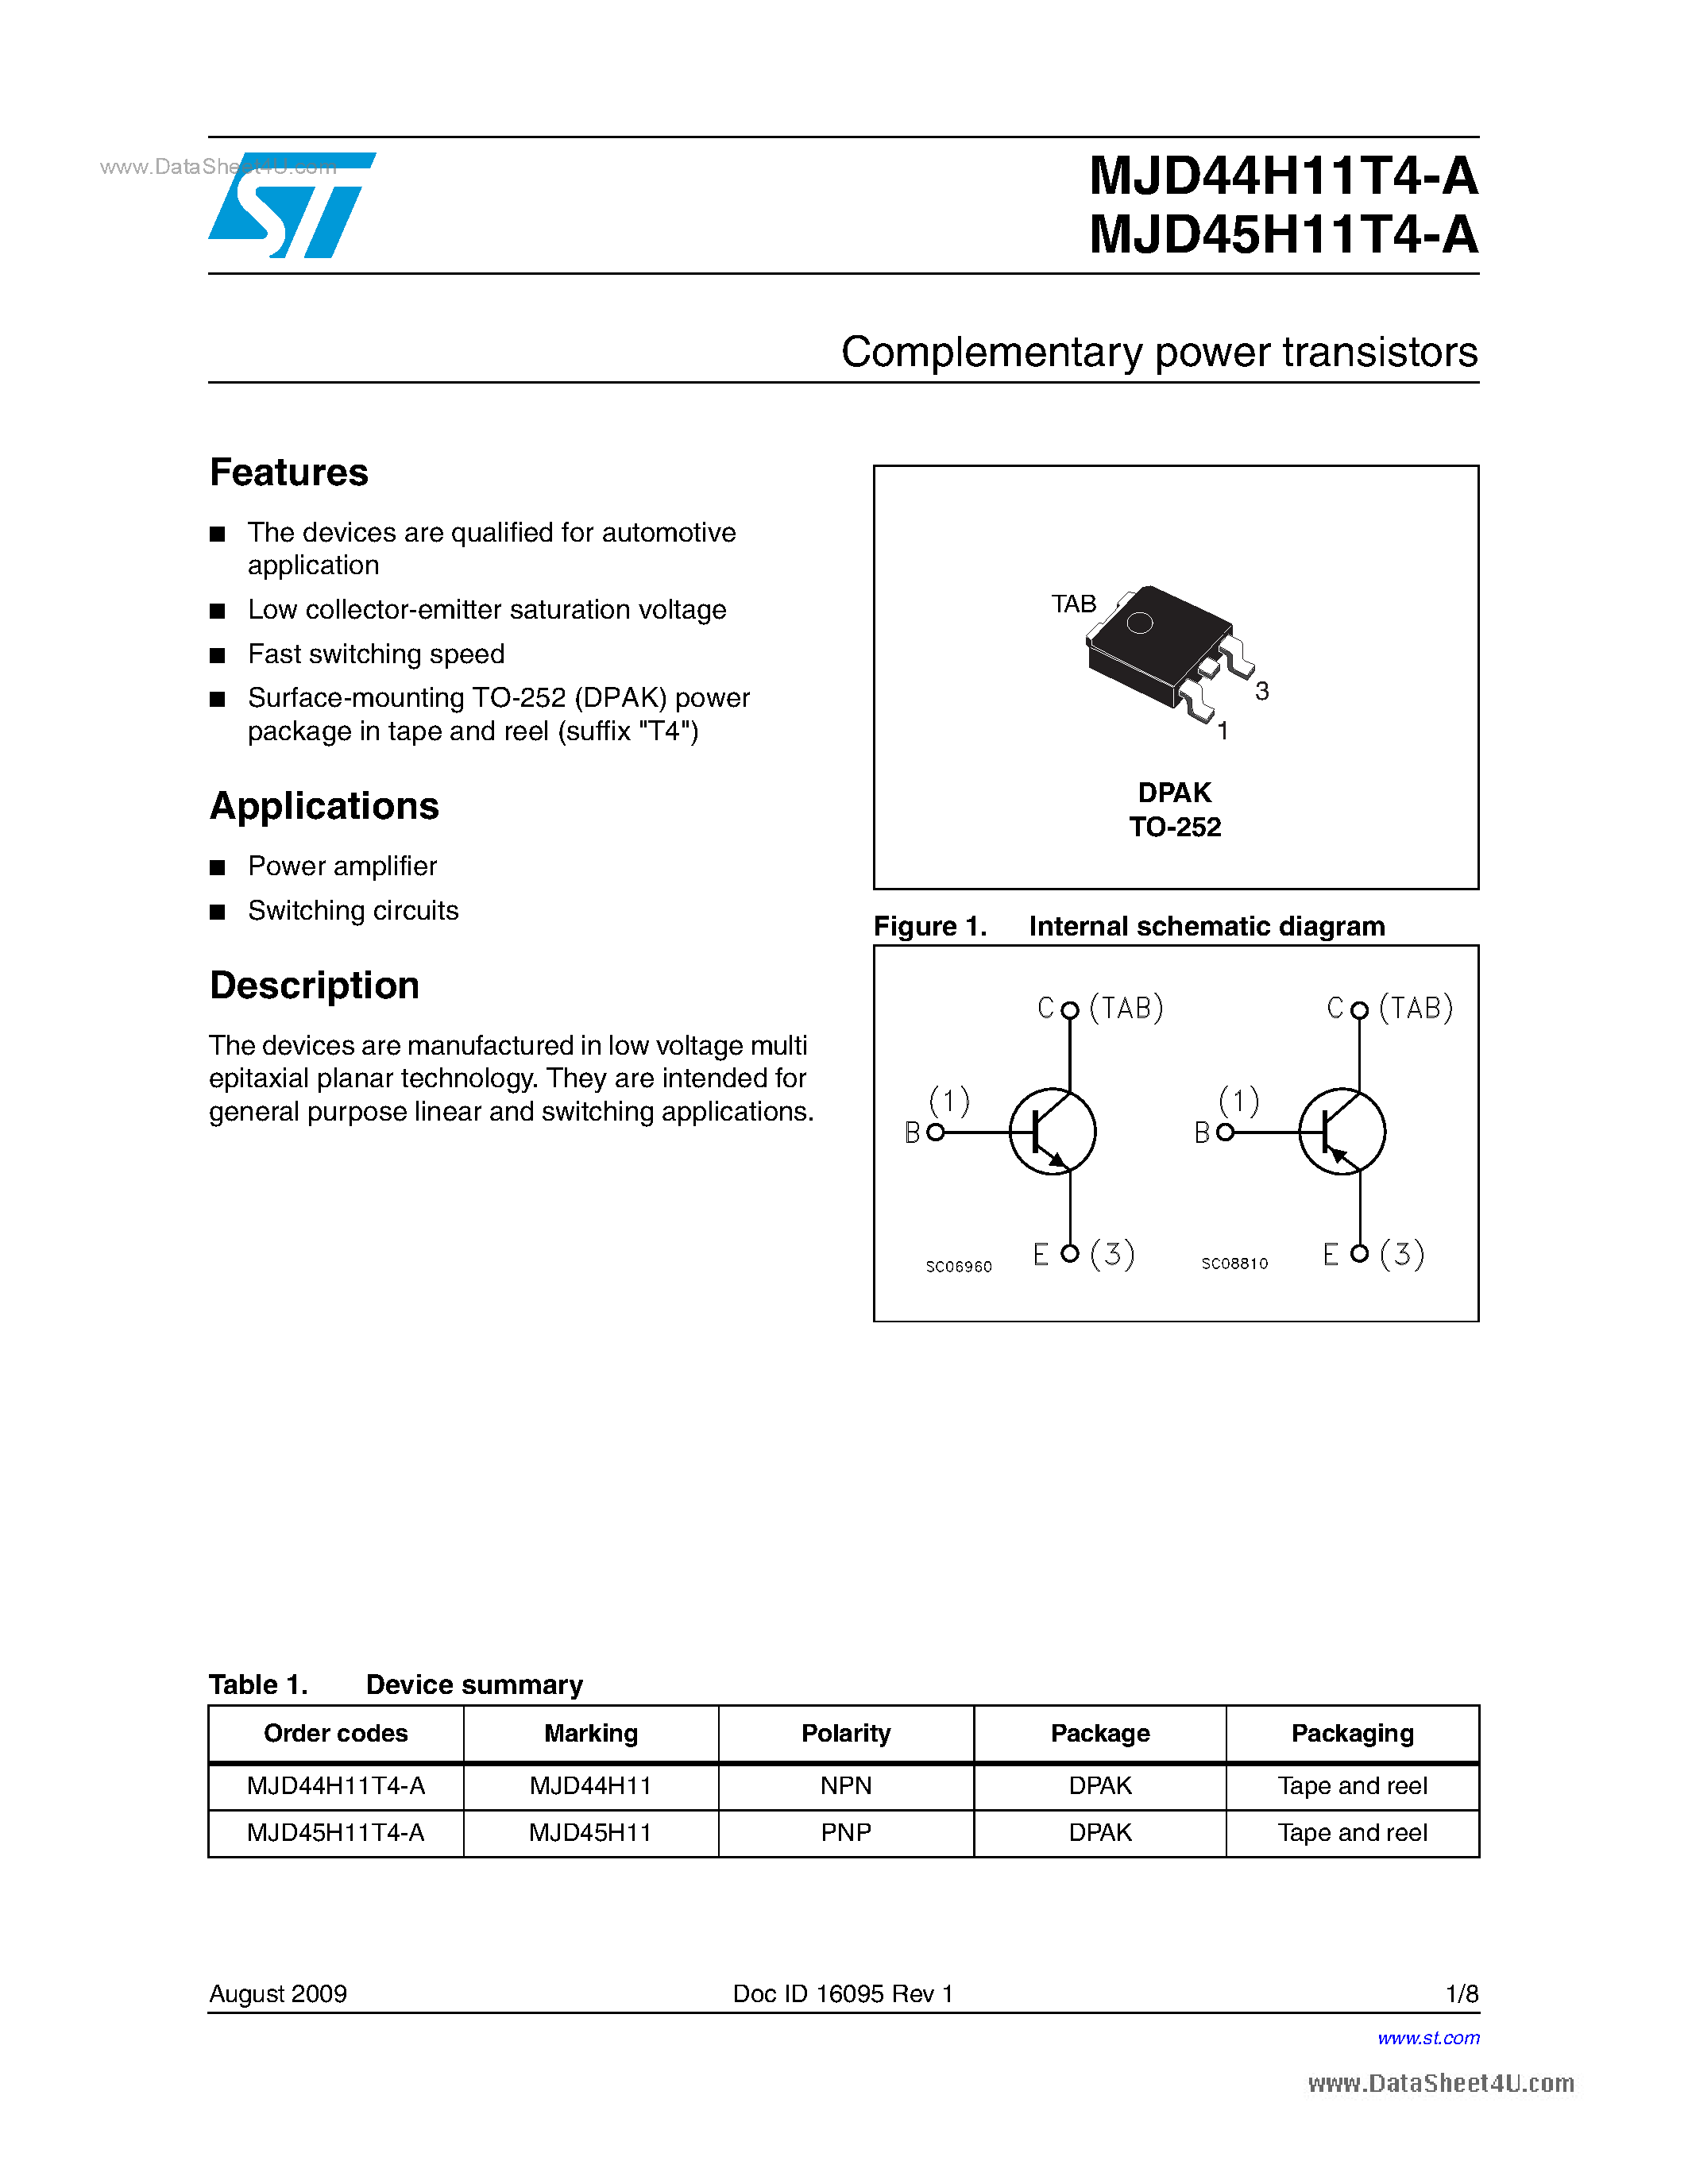 Даташит MJD44H11T4-A - (MJD44H11T4-A / MJD44H11T4-A) Complementary power transistors страница 1